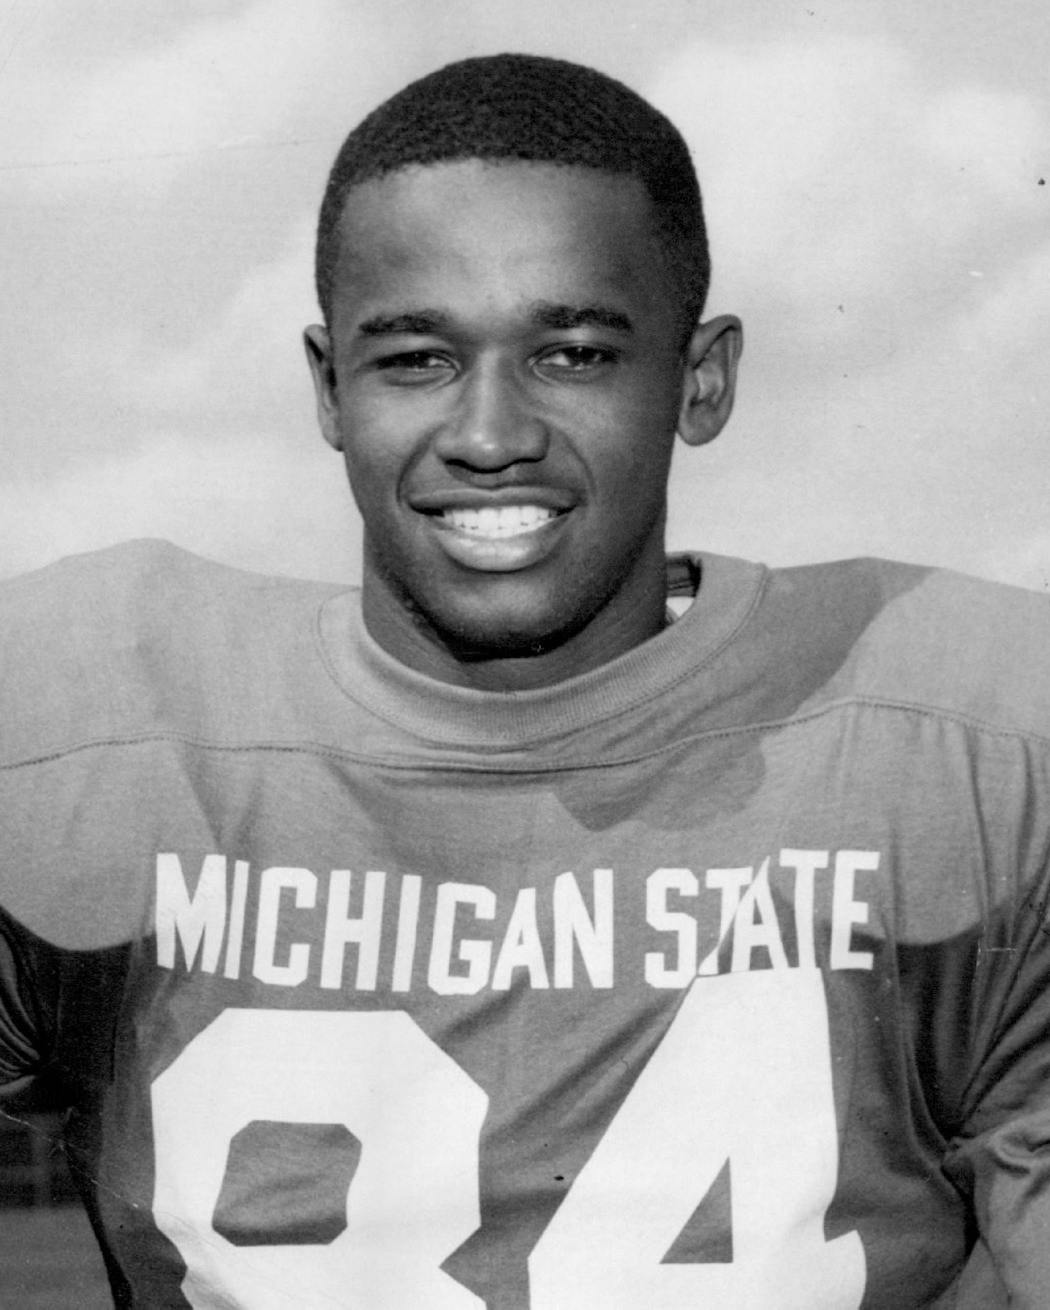 Gene Washington as a Michigan State Spartan.